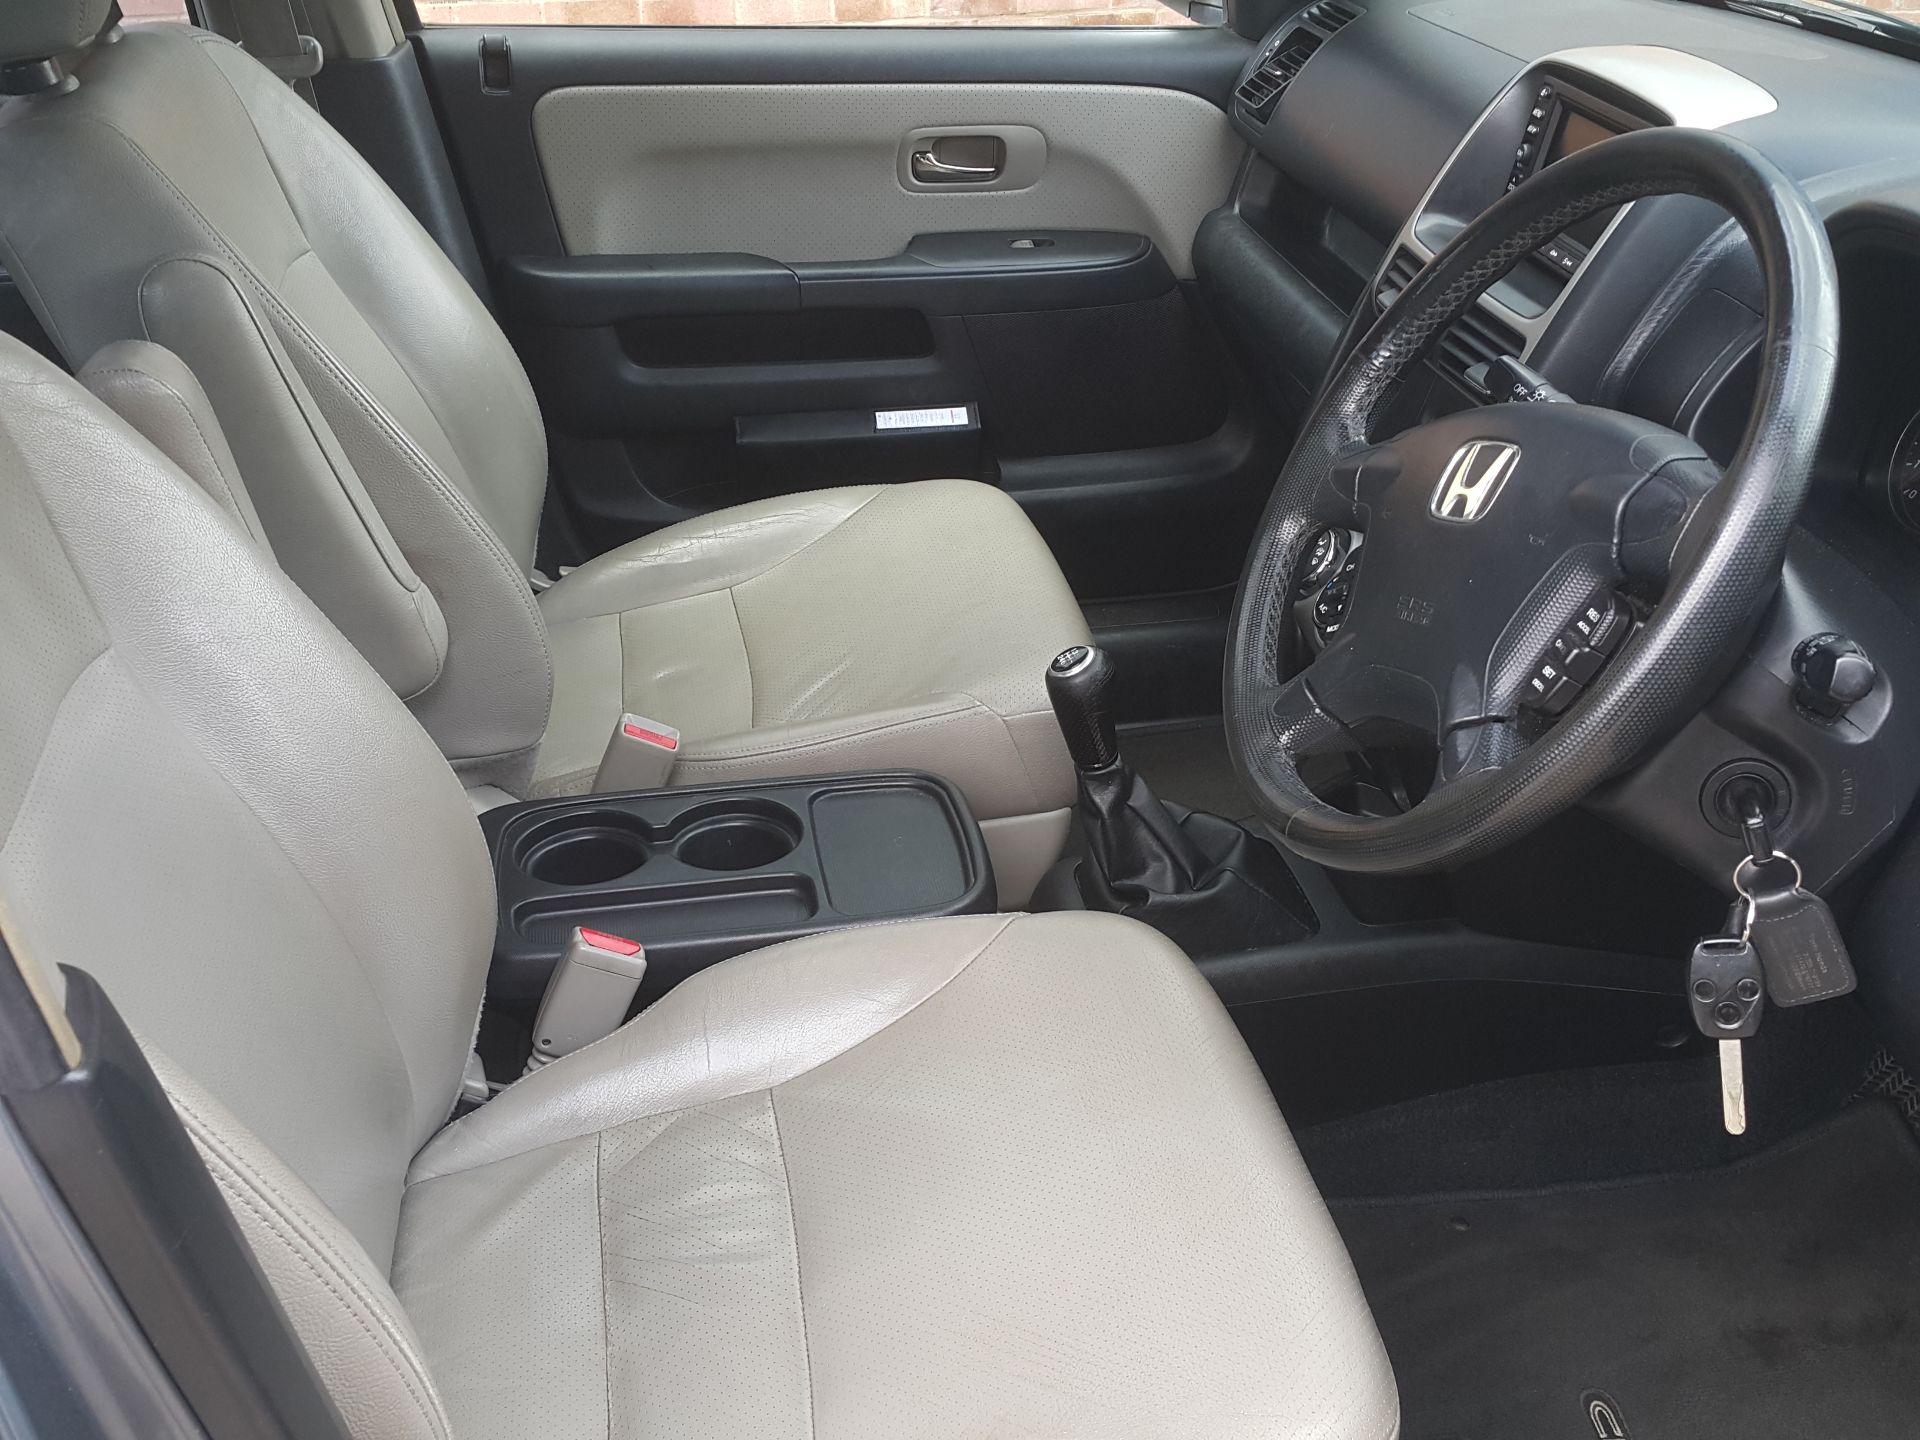 Honda CRV 2.2i CDTI Executive - 4x4, Manual, Diesel, 135000 Miles, MOT'd Until Sep 2018 - Image 10 of 20